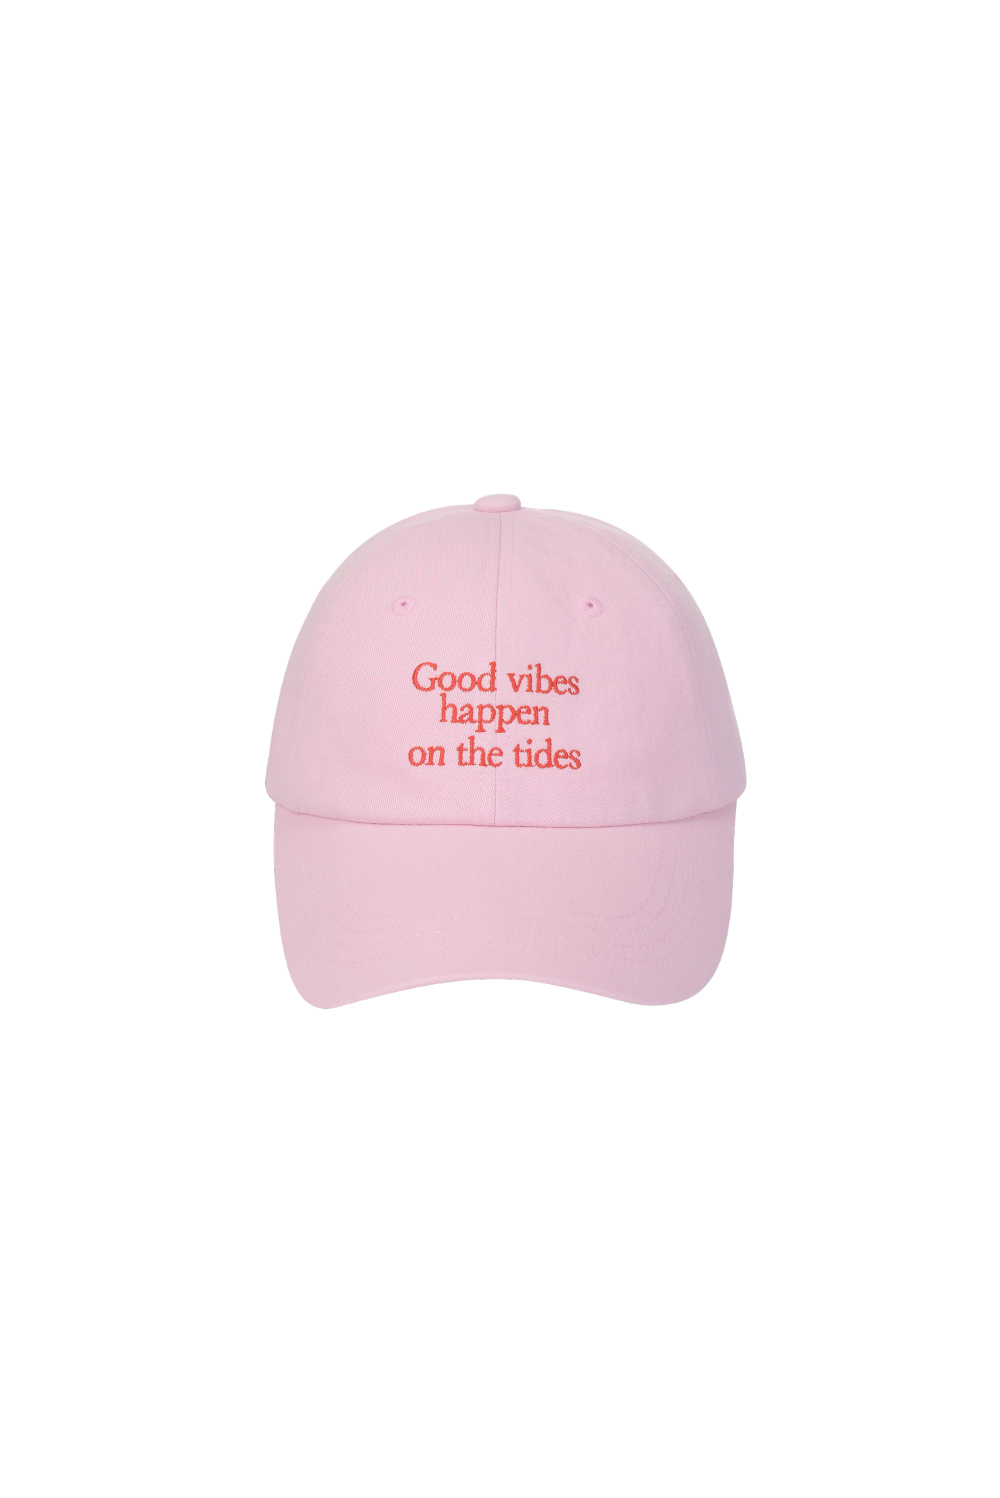 帽子 baby pink 彩色图像-S1L45